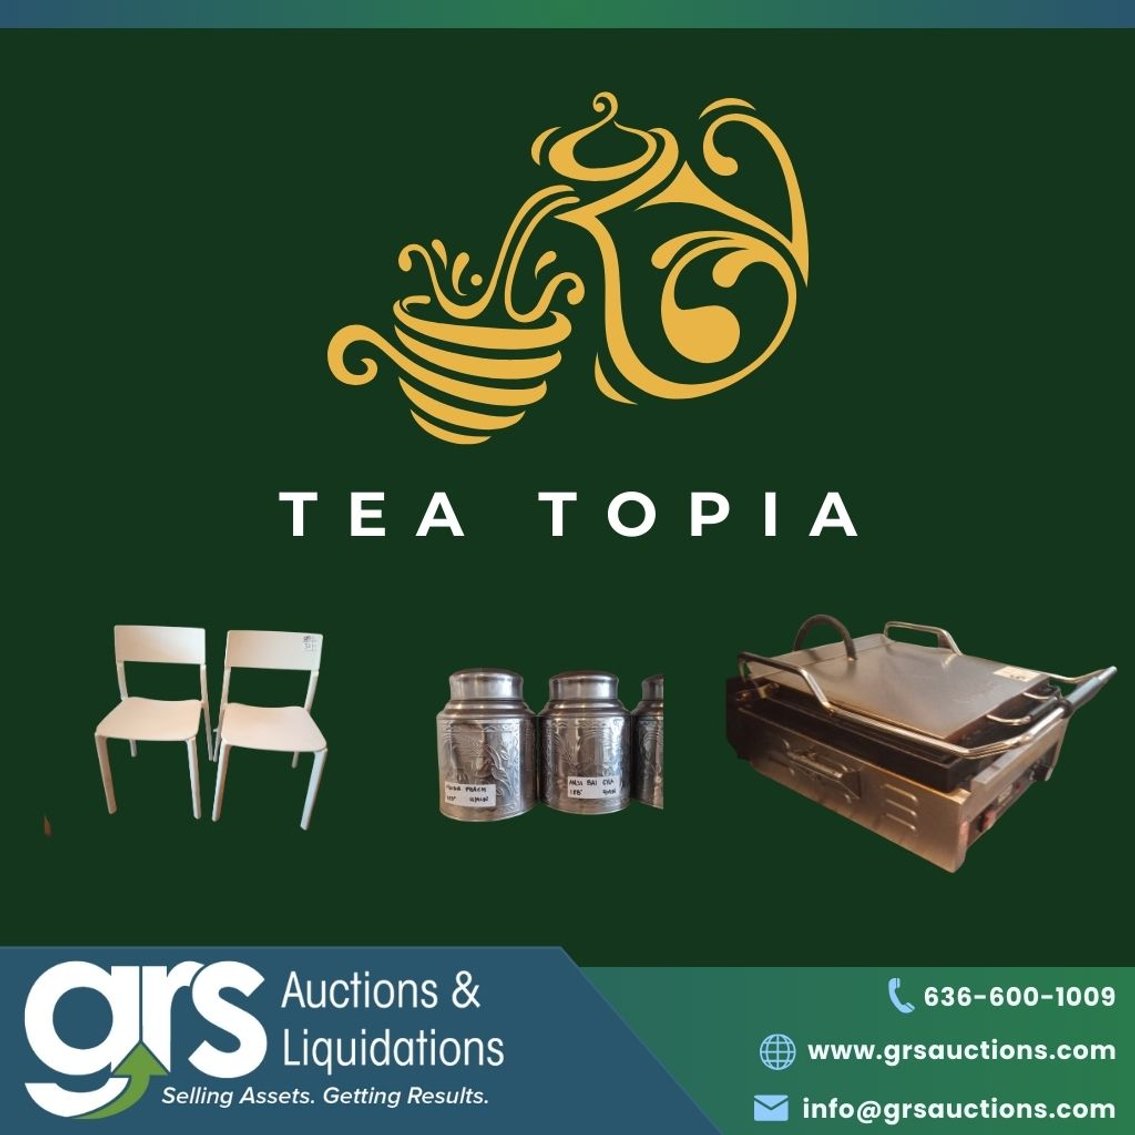 TeaTopia Online Auction